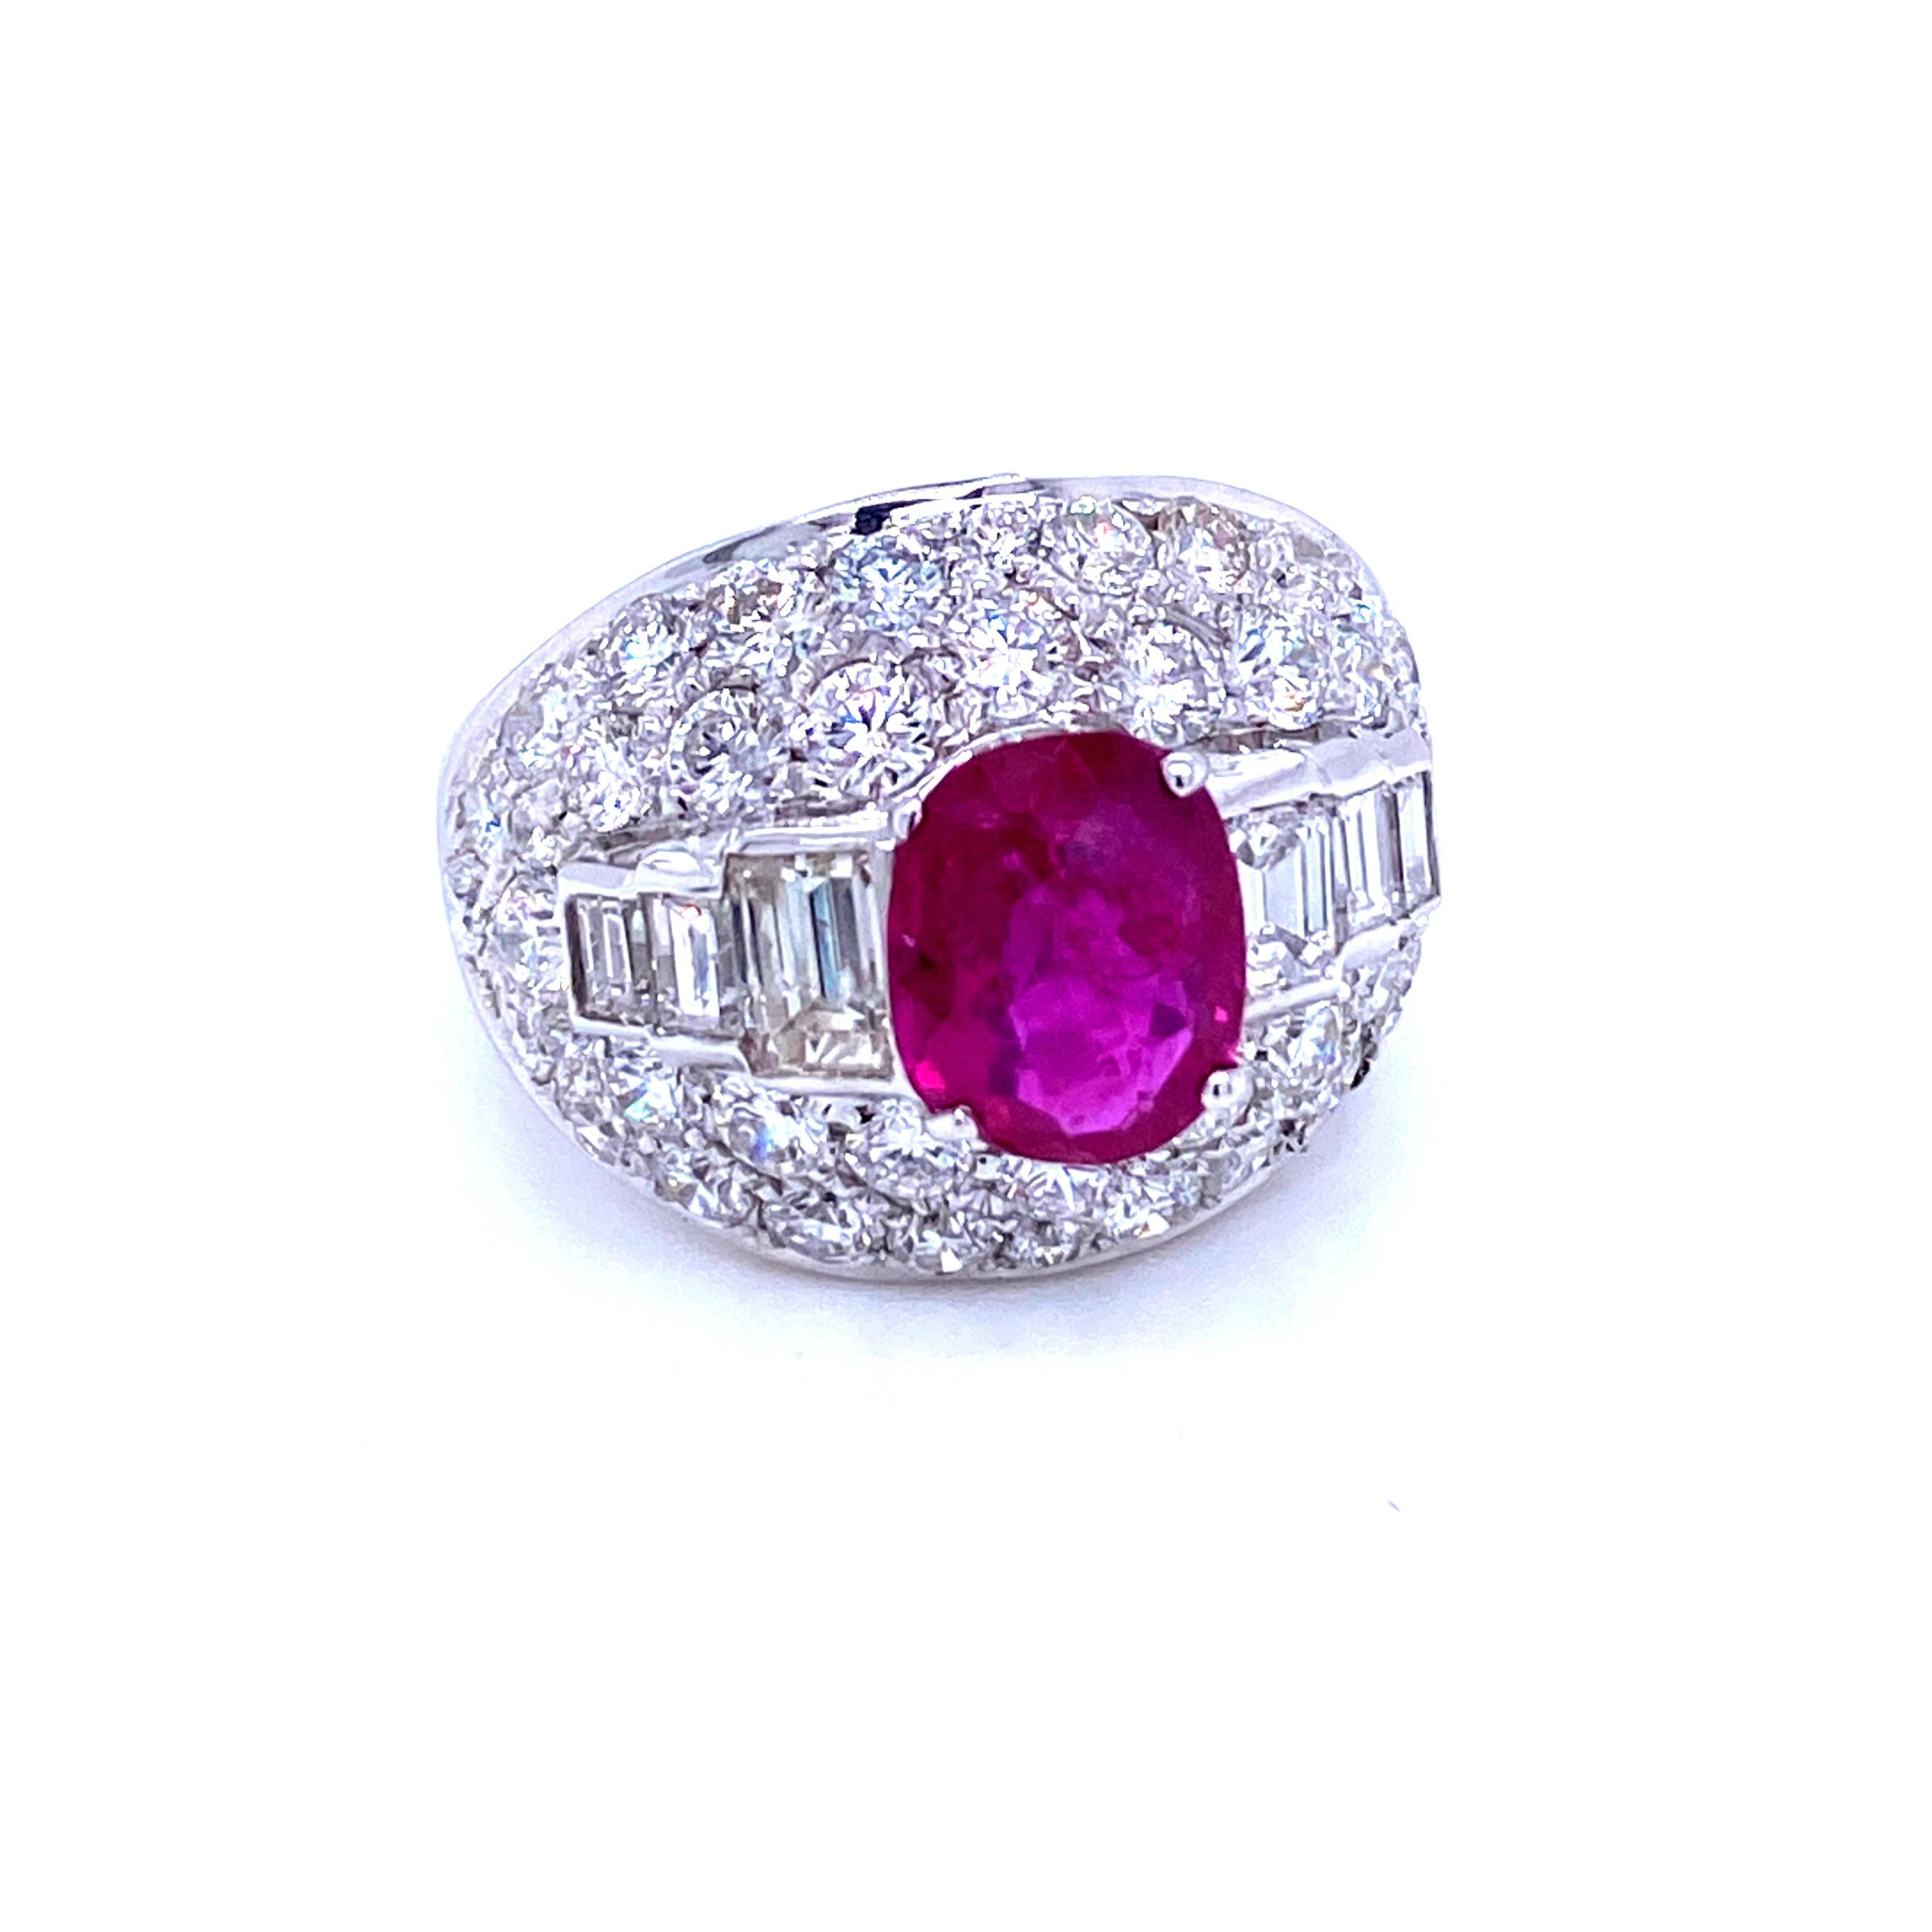 Oval Cut Estate Certified 2.52 Carat Unheated Burma Ruby 3.80 Carat Diamond Trombino Ring